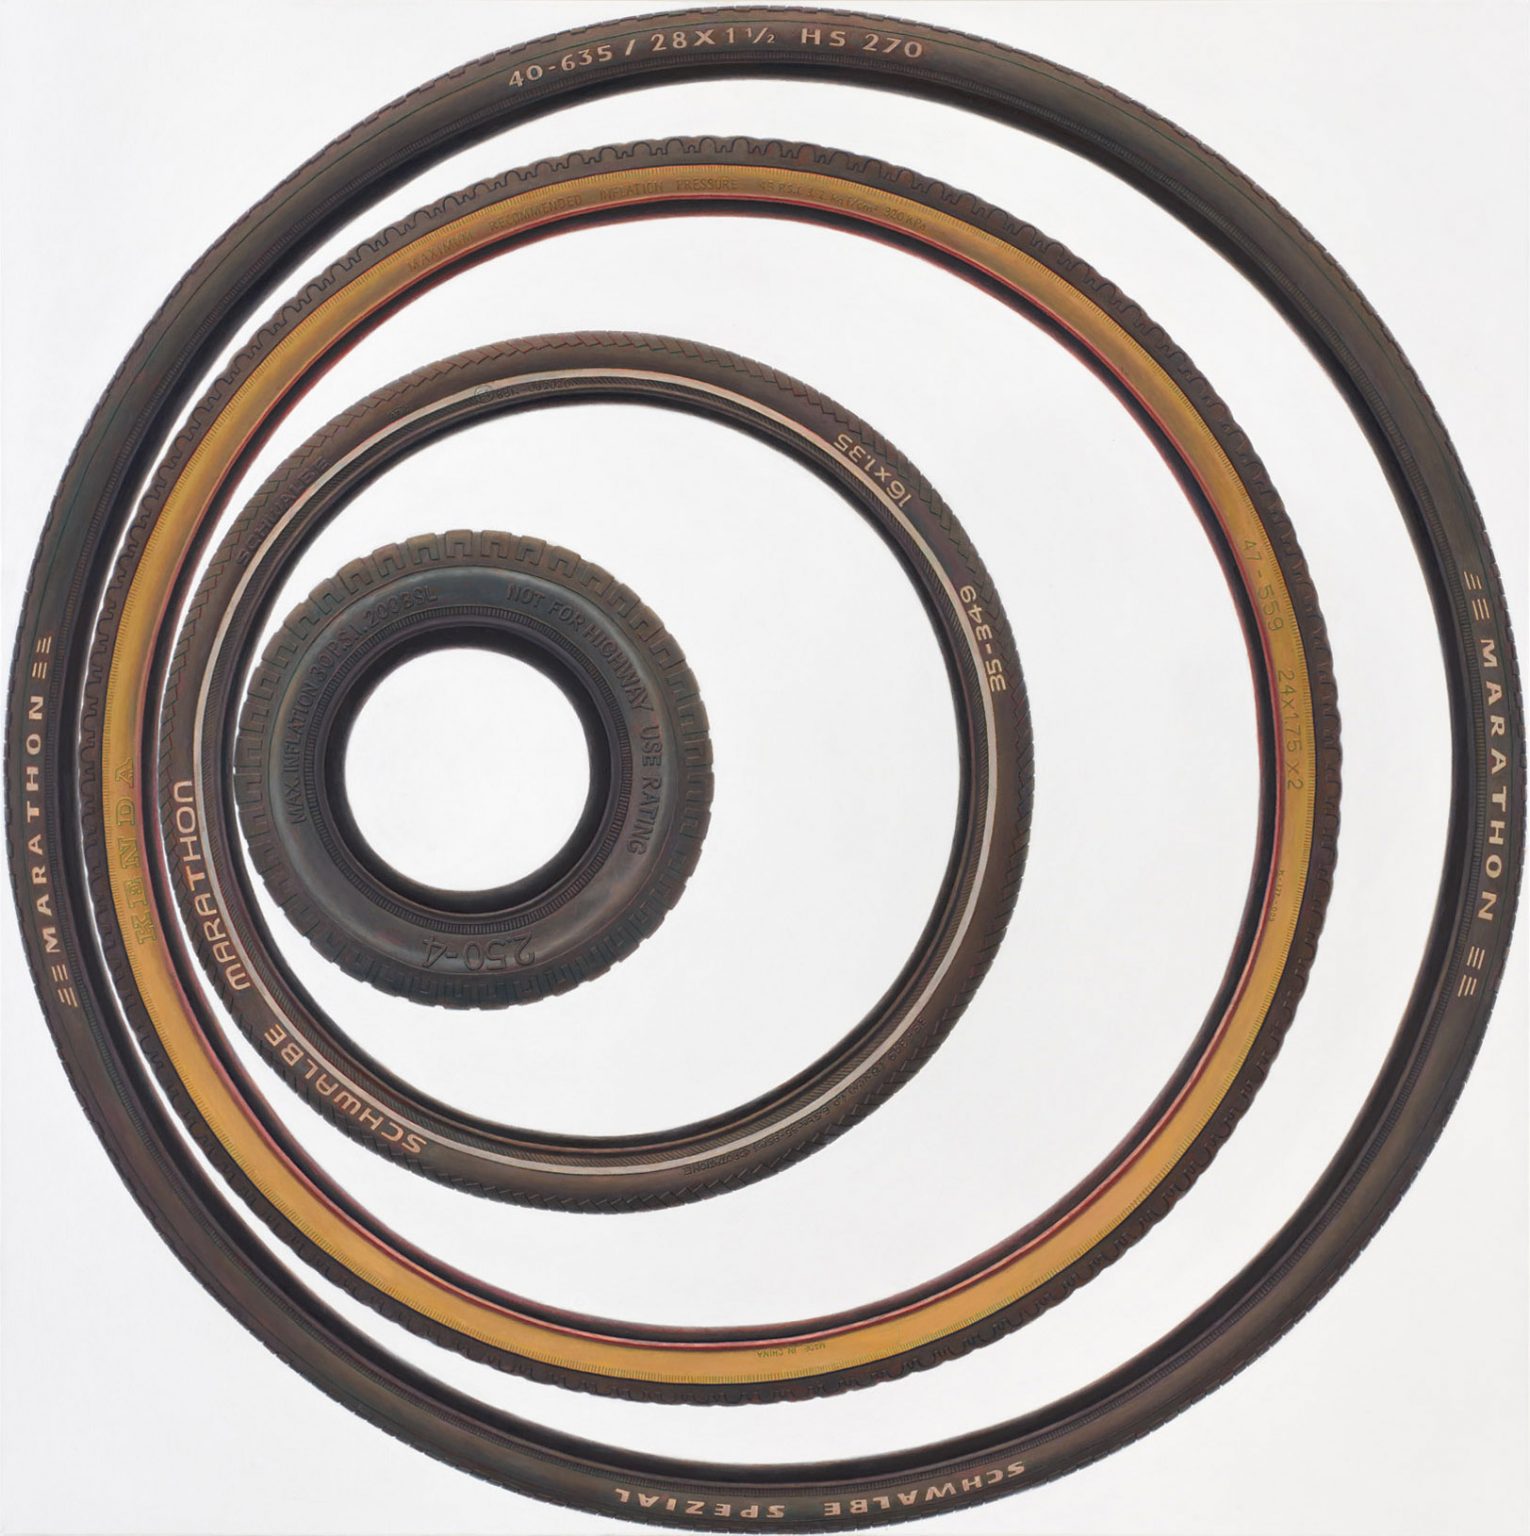 René Wirths, Reifen, 2016, Öl auf Leinwand, 190 x 190 cm